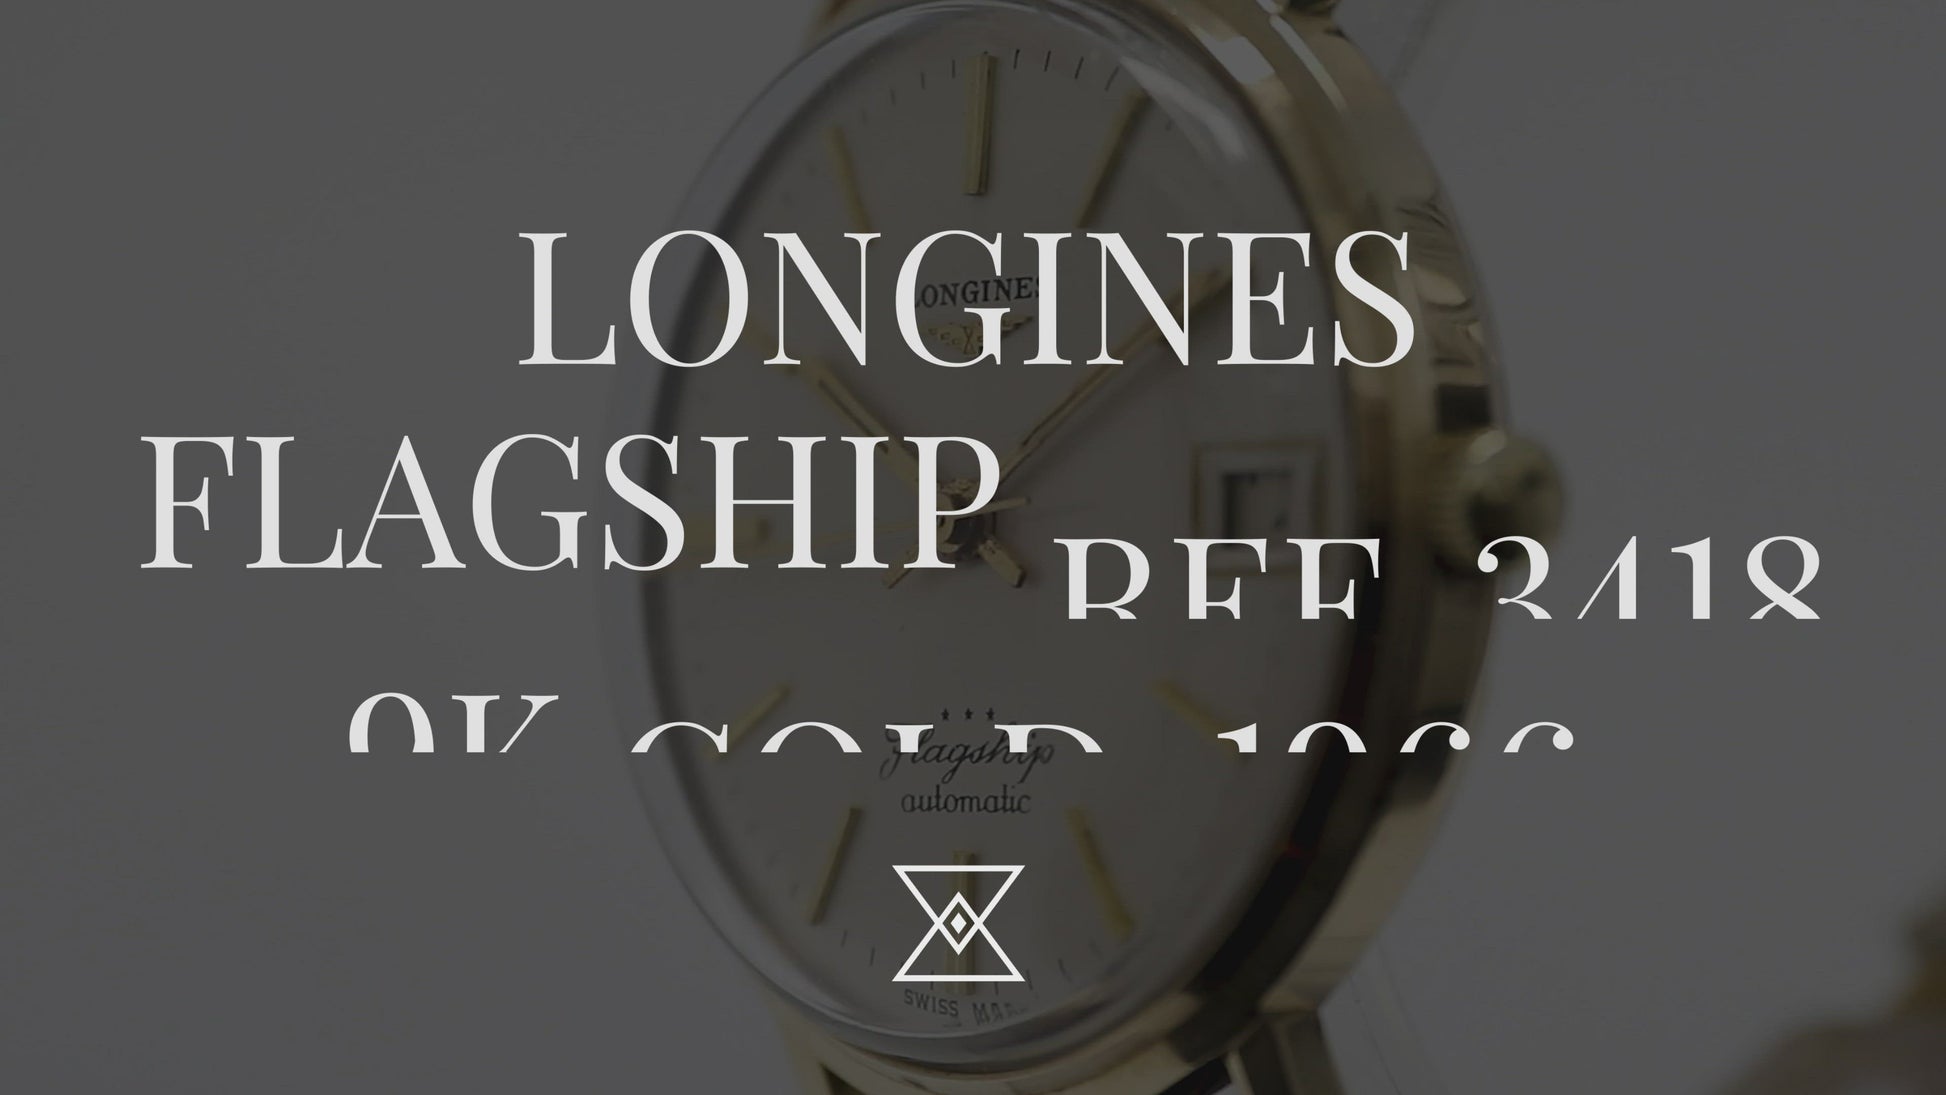 Longines Flagship Ref. 3418 "Big Ship" 9k Gold, 1967 Video